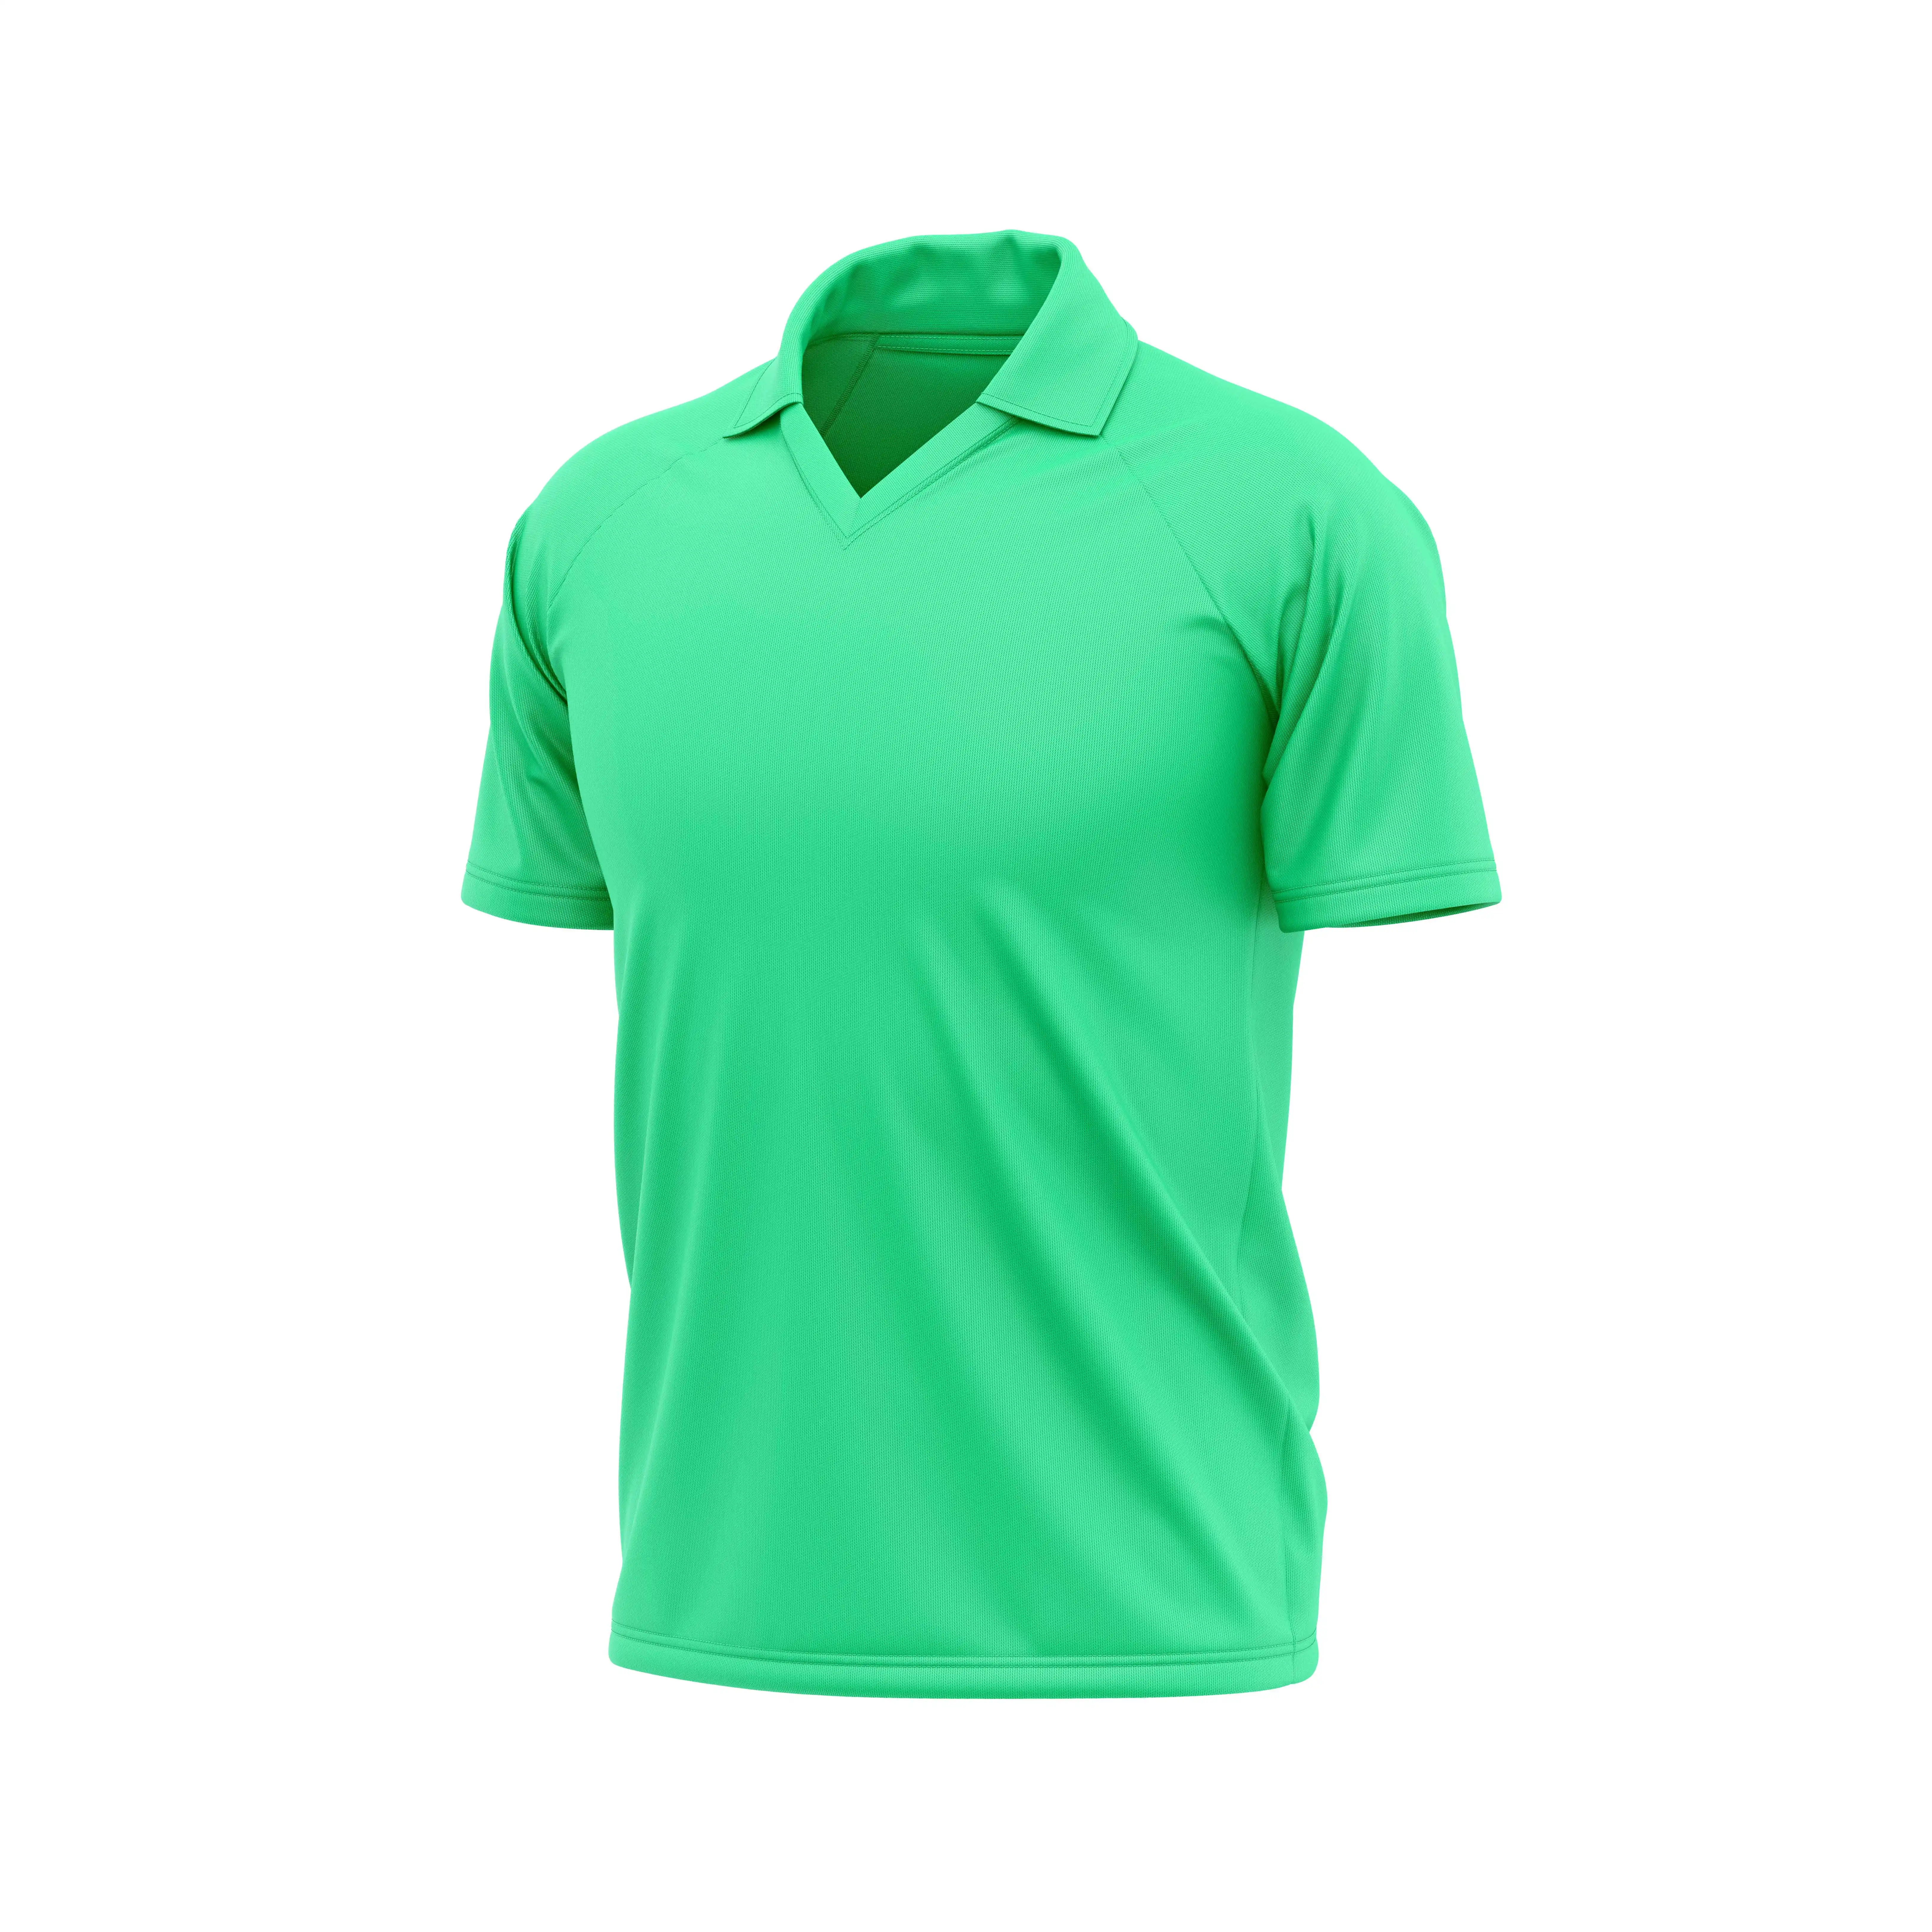 Productie Maatwerk Nieuwe Mode T Shirts Nieuwste Stijl Heren Poloshirts Korte Mouwen Polo T-Shirts